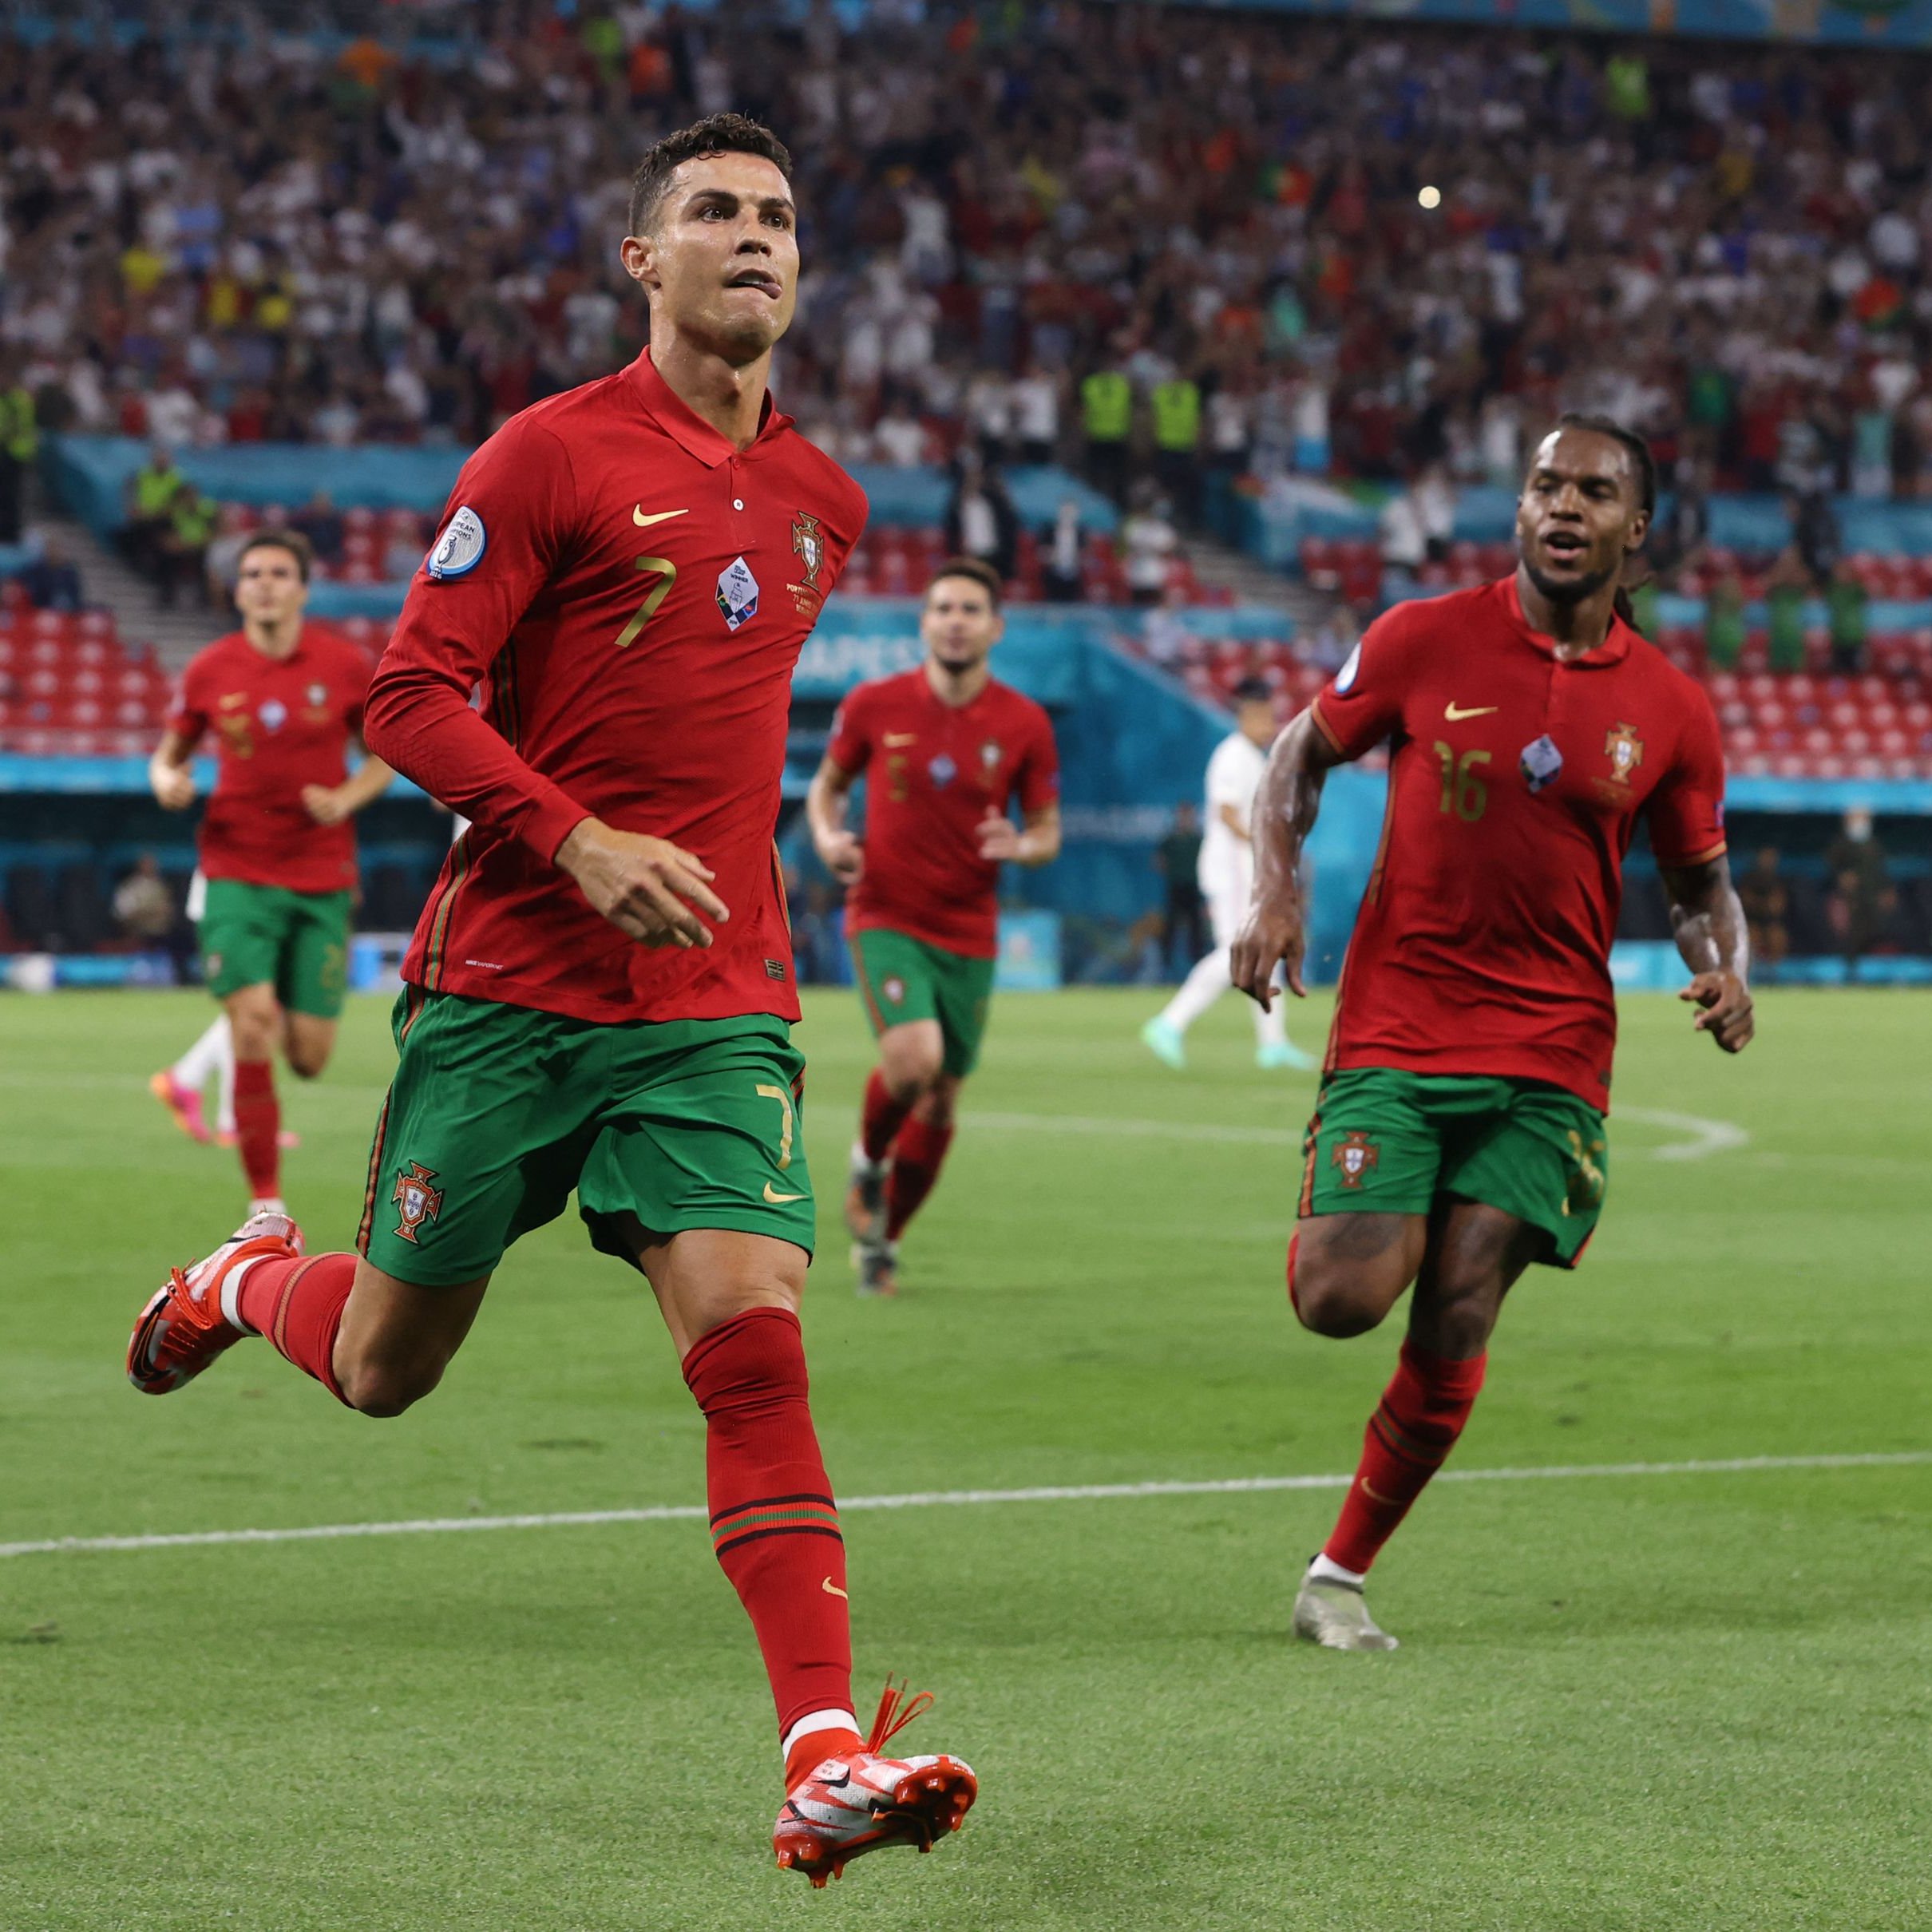 Eurocopa: Ali Daei parabeniza Cristiano Ronaldo por igualar recorde de gols; astro agradece